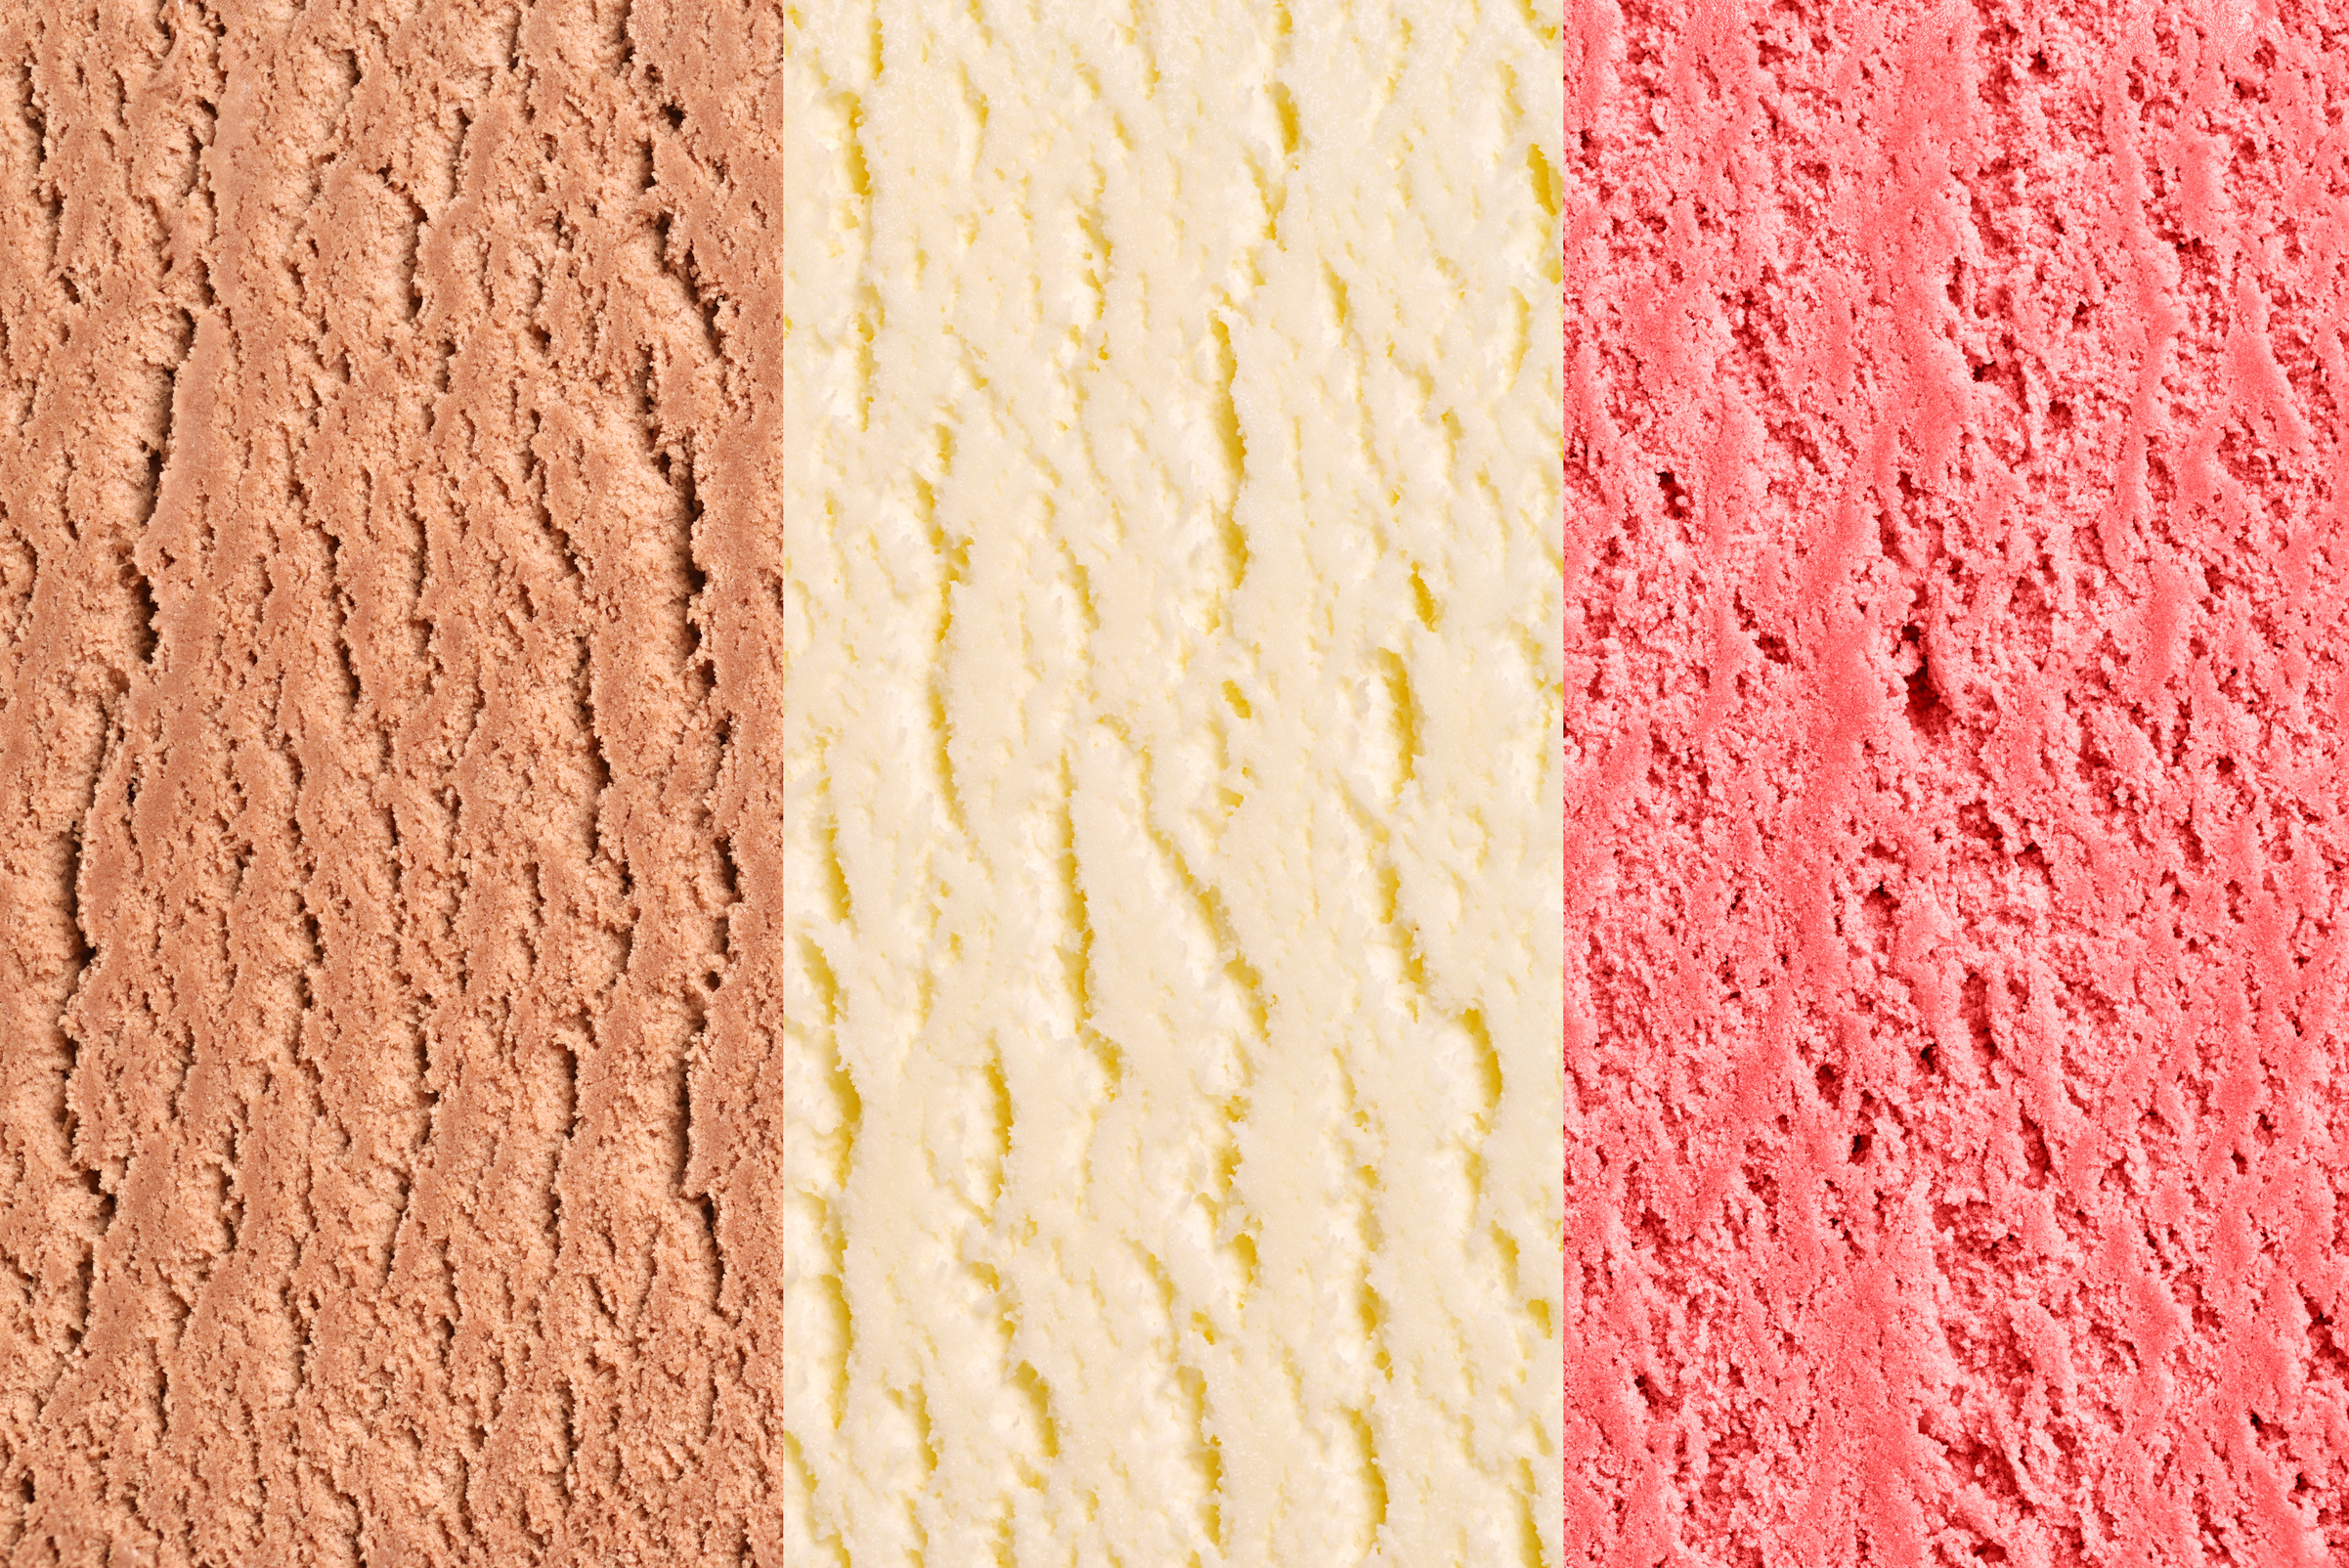 Neapolitan ice-cream texture or background.